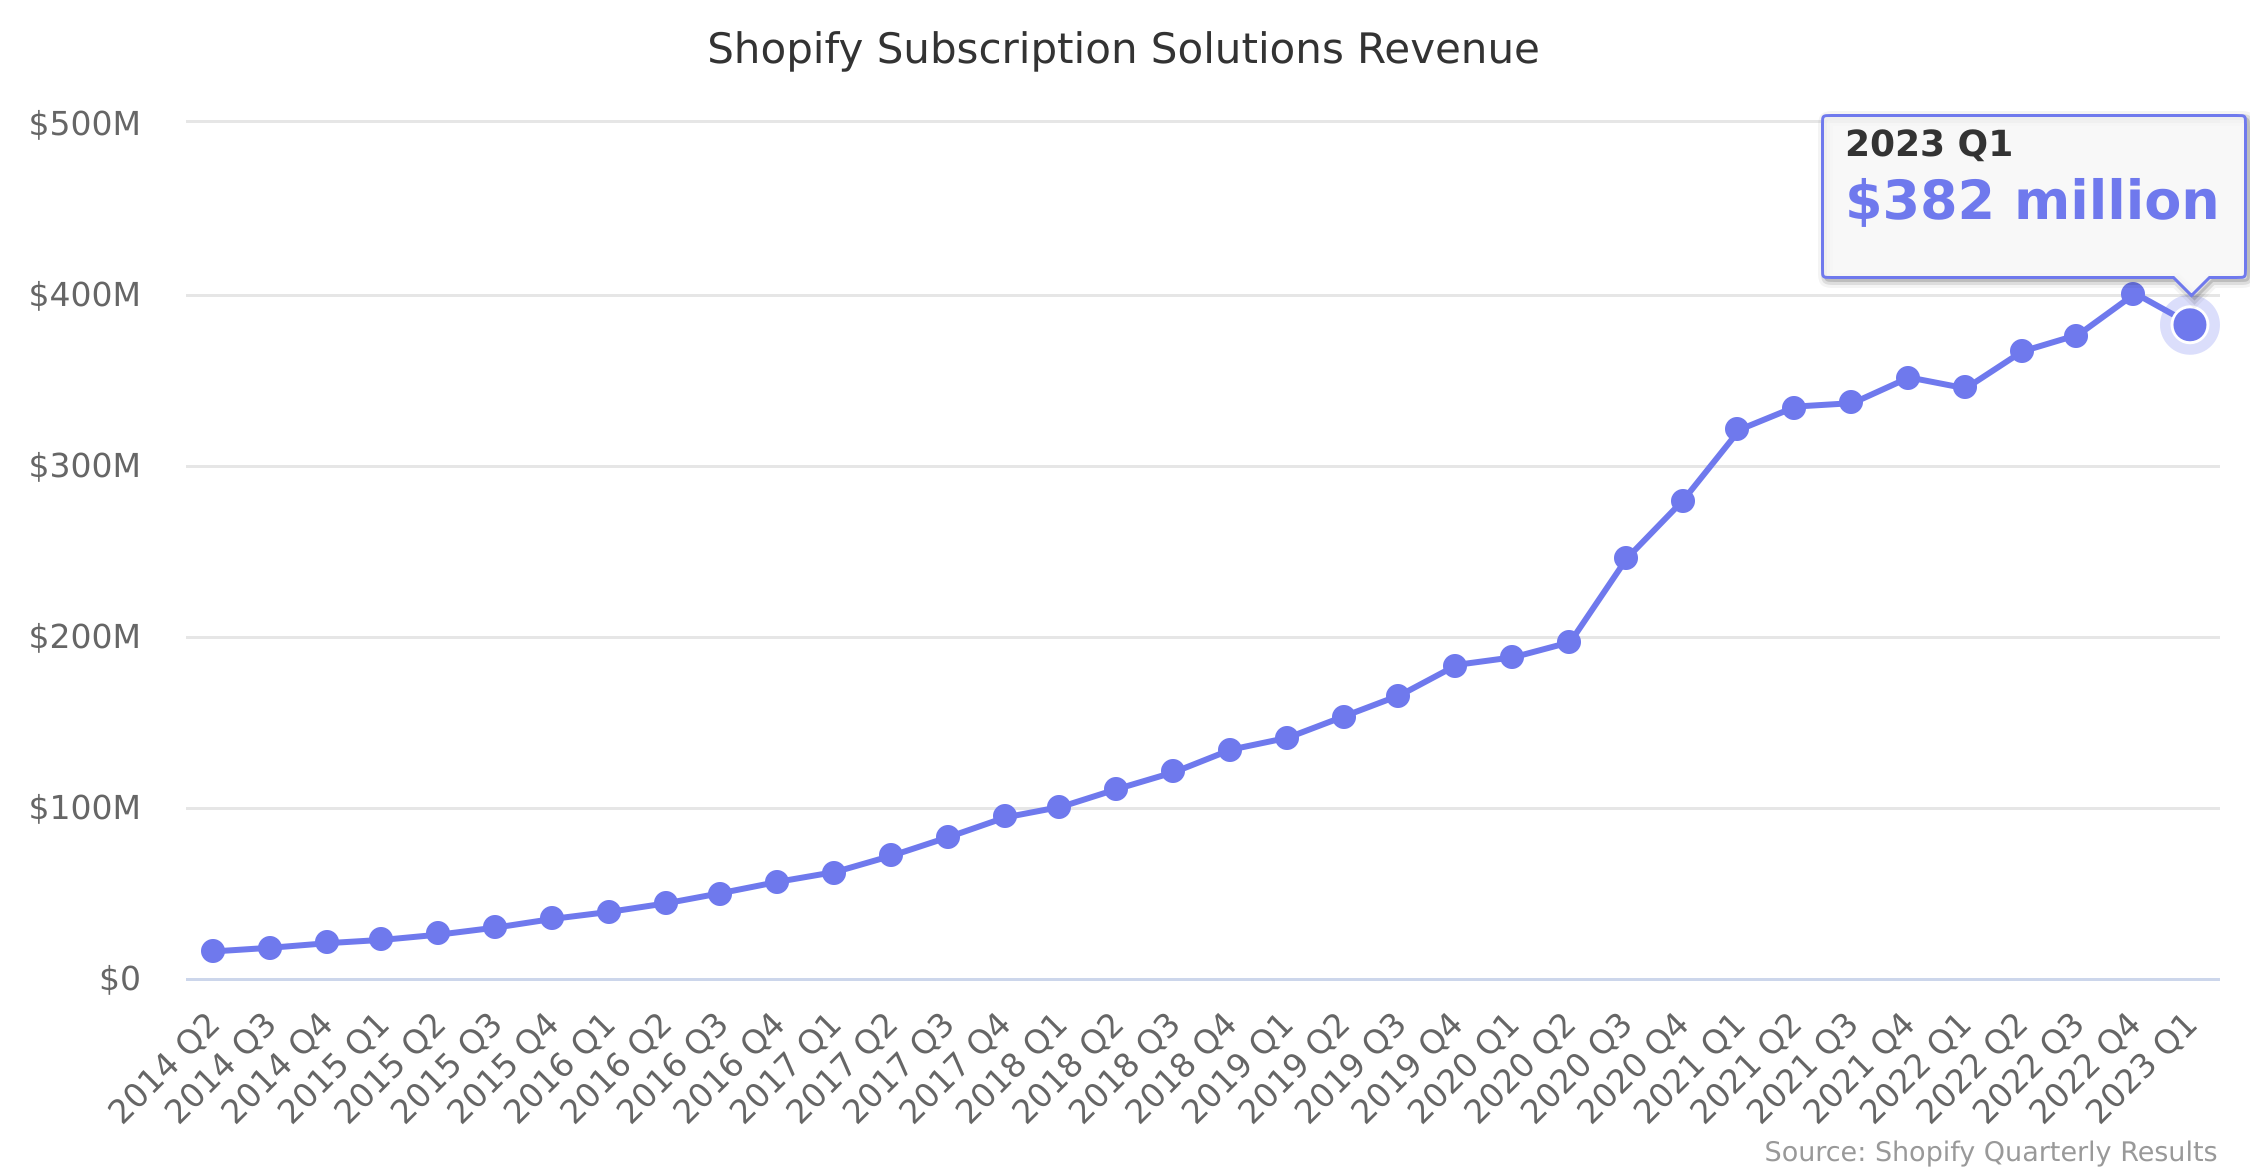 Shopify Subscription Solutions Revenue 2014-2023